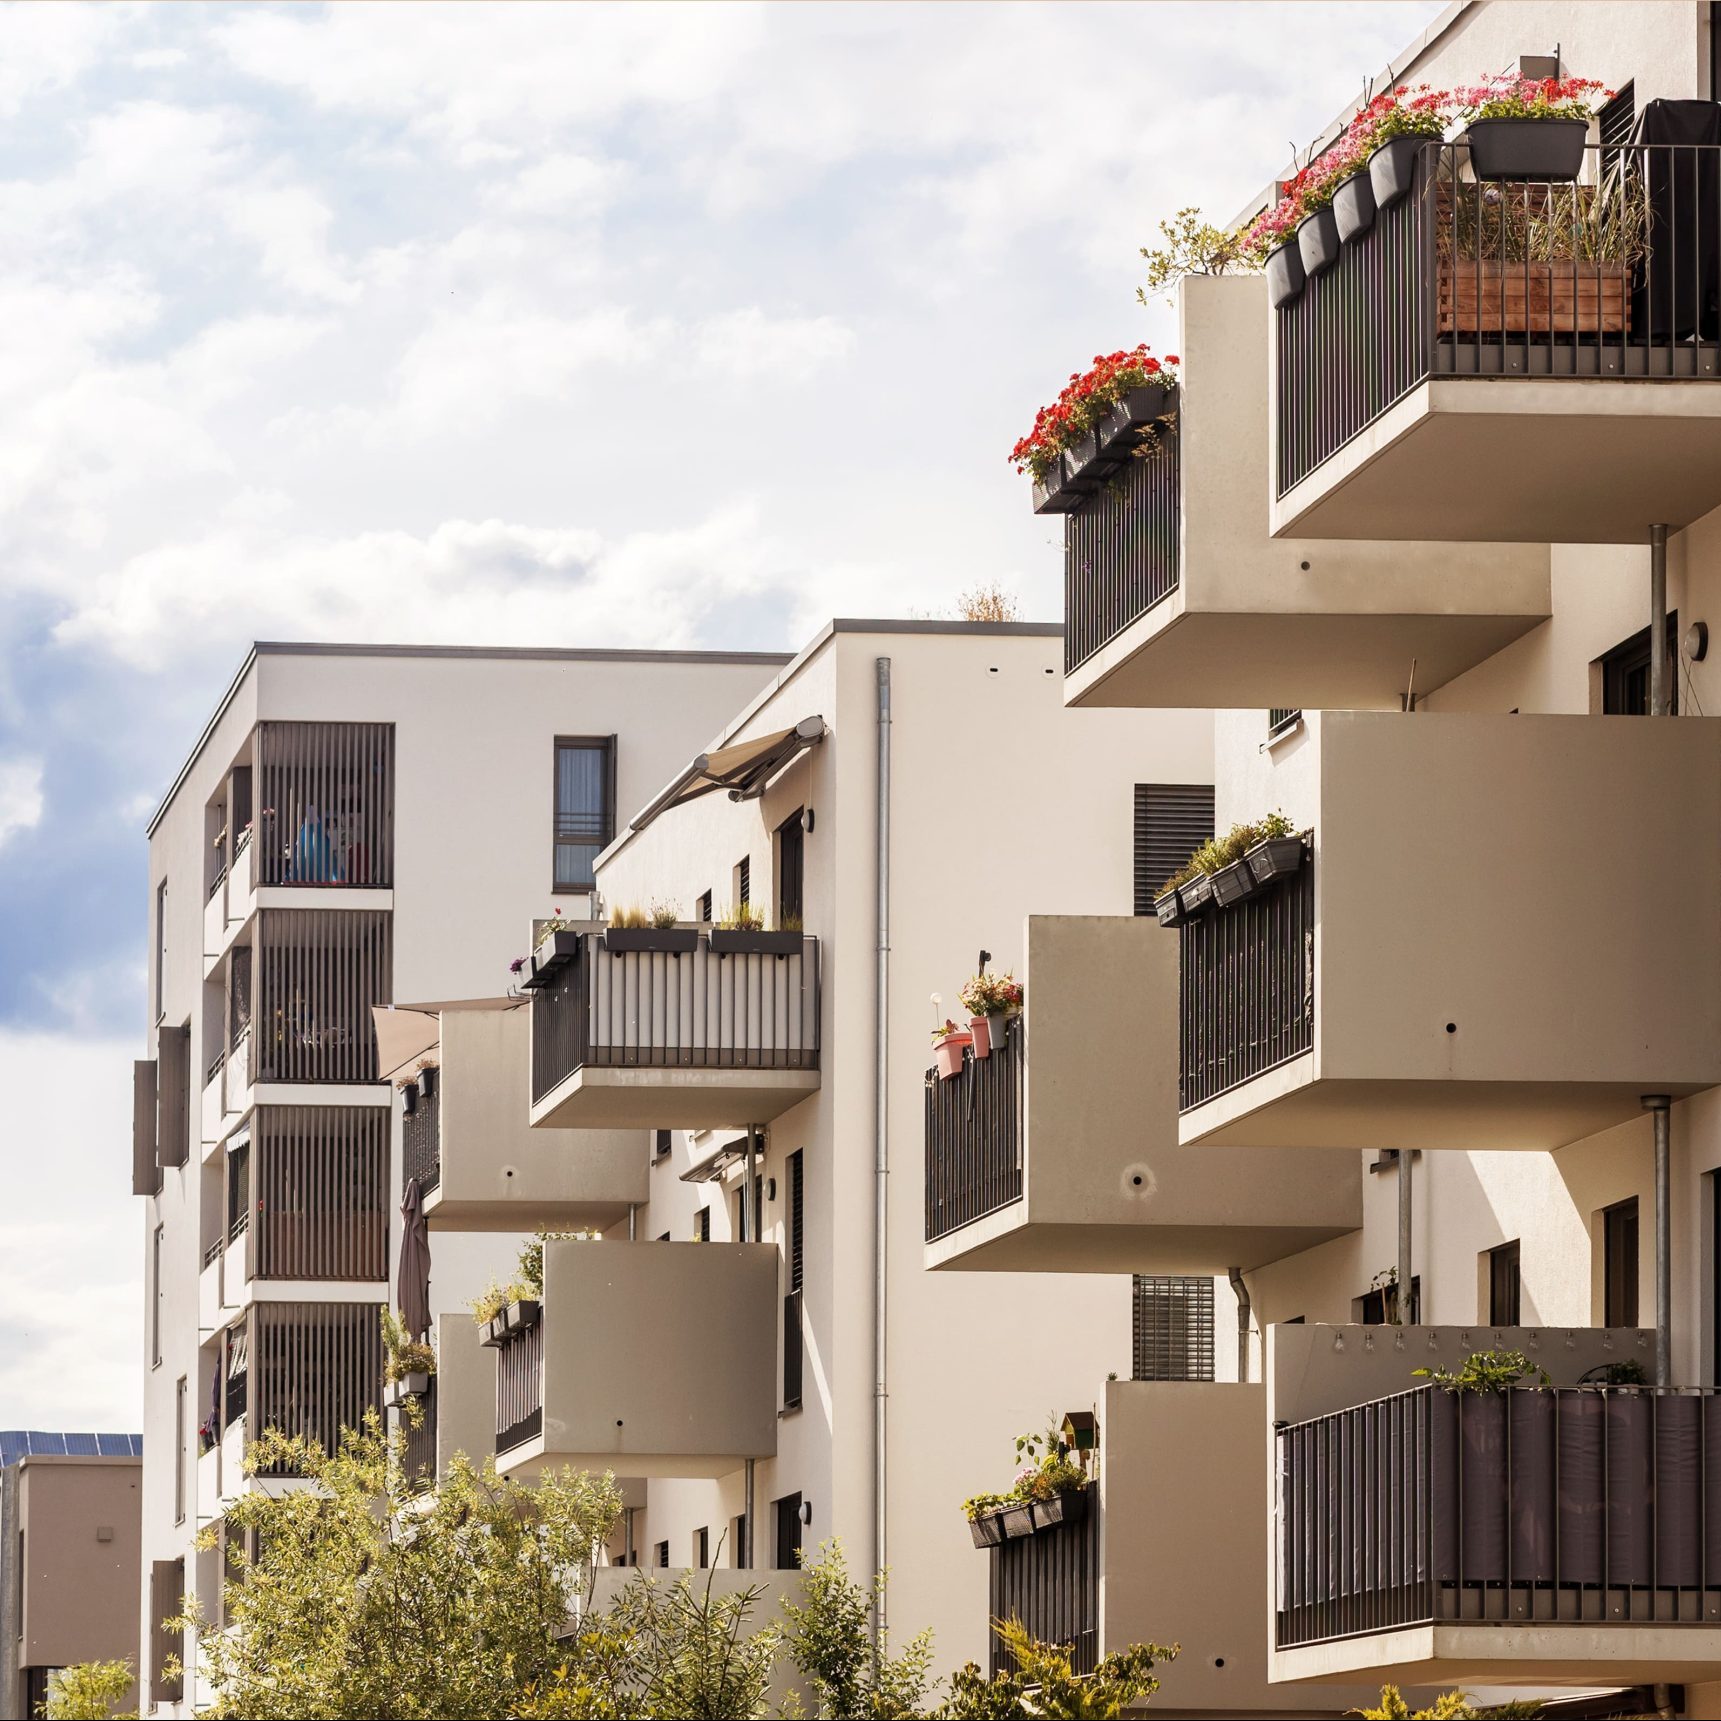 balcony-facade-house-exterior-design-classic-modern-balconies-fence-railings-flowers-europe